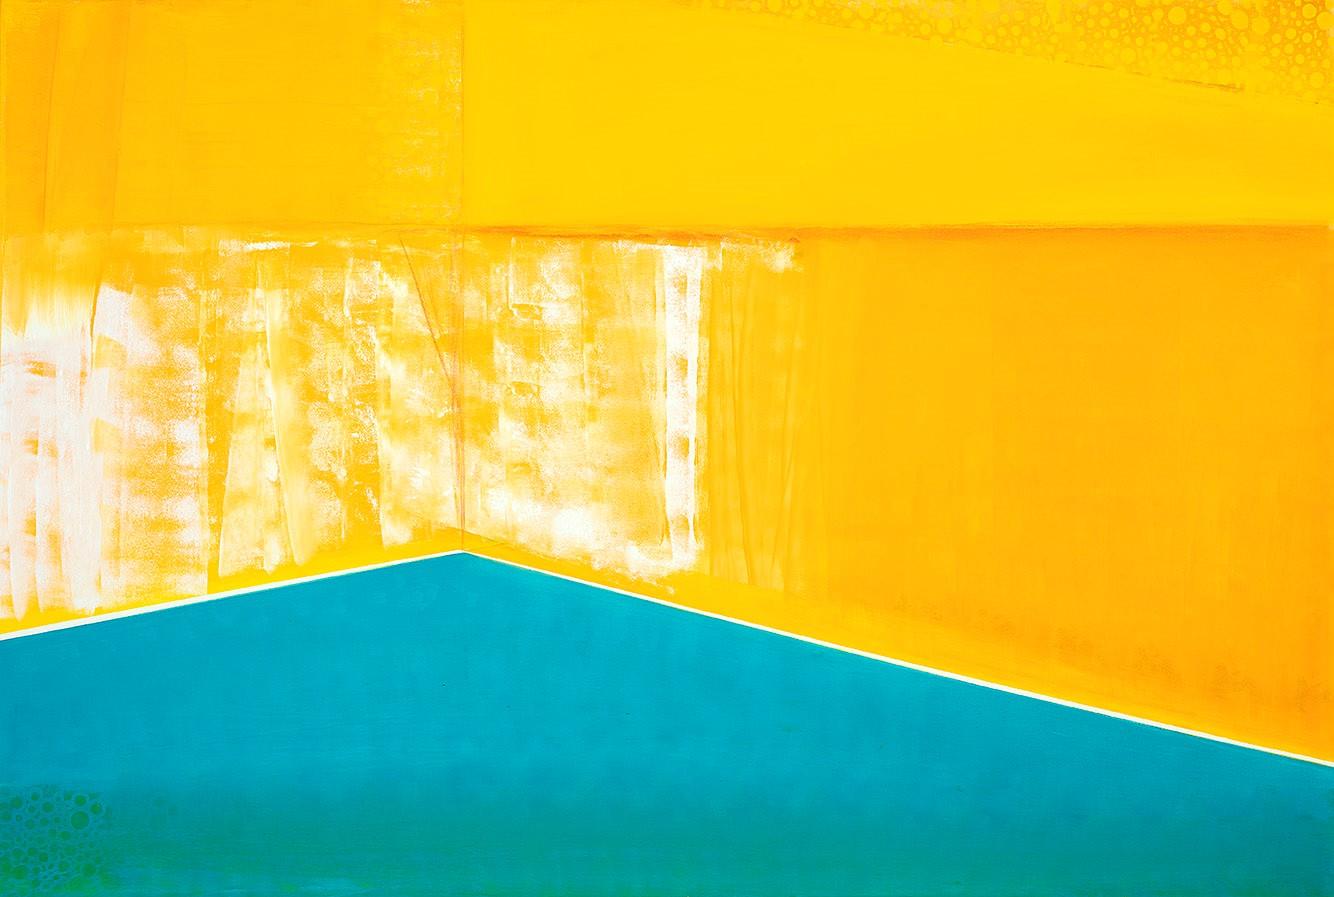 Gail Morris Abstract Painting - "Bel Air"